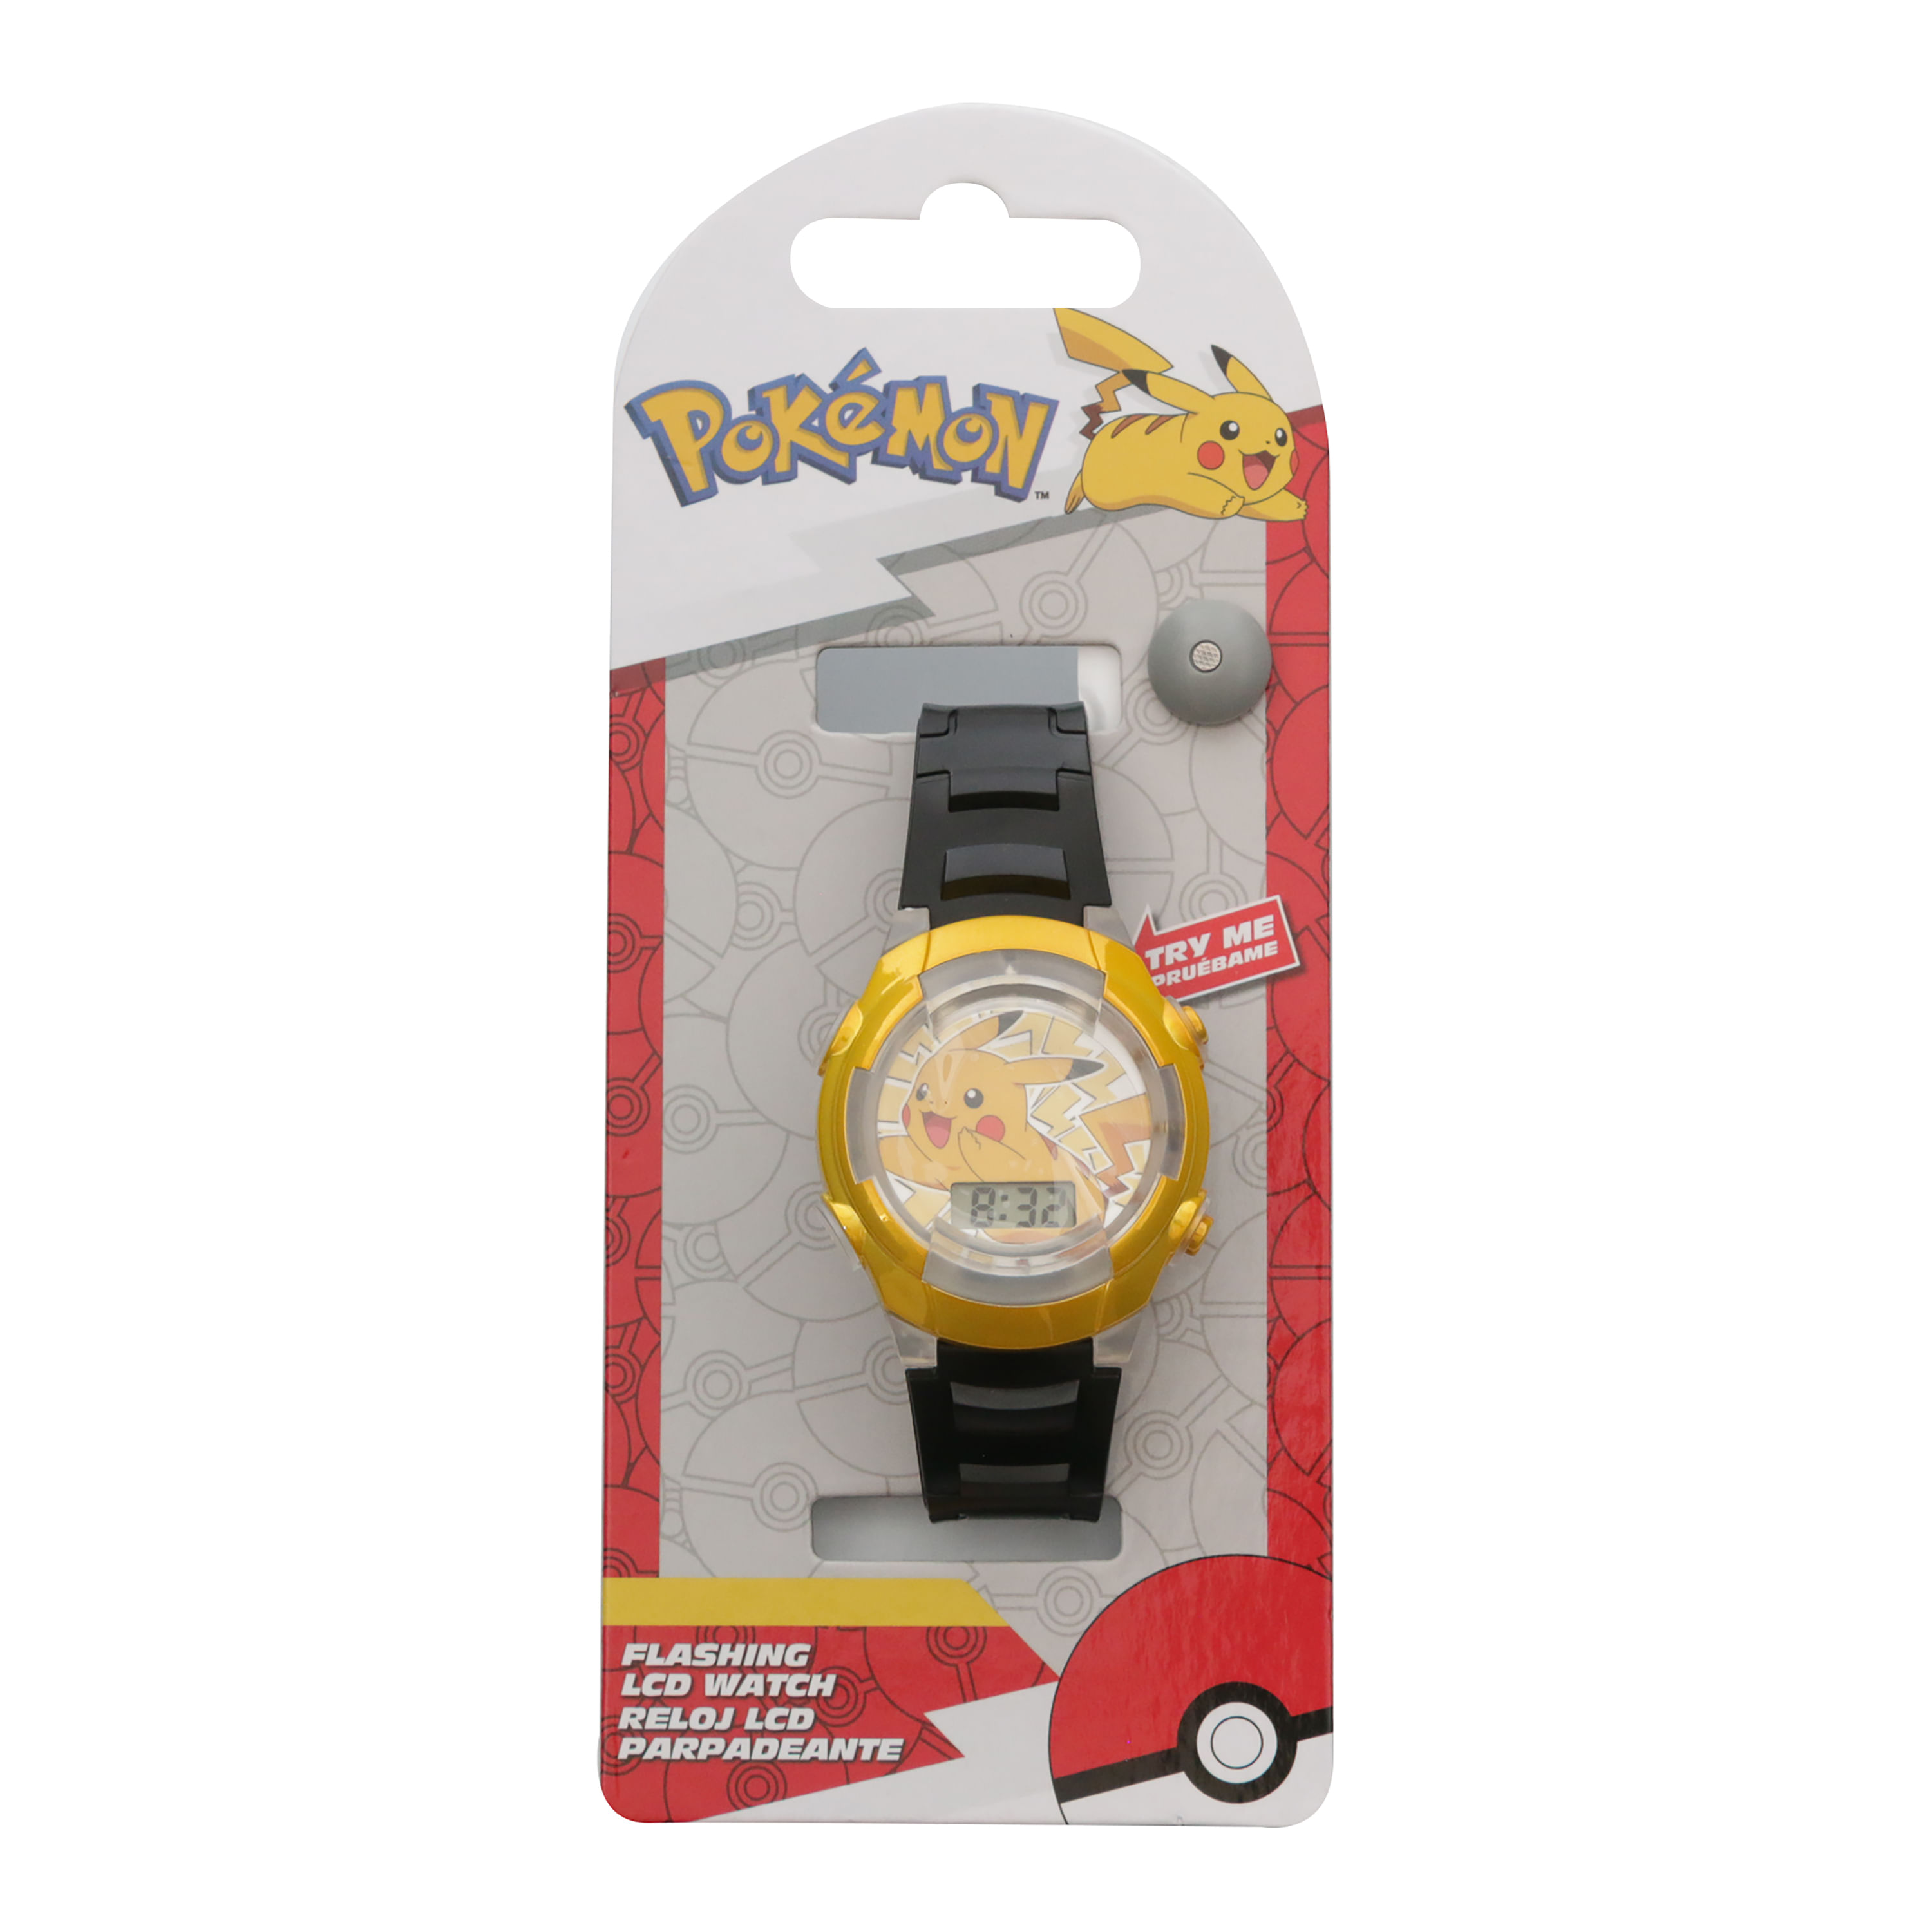 Comprar Reloj Pokemon Lcd Parpadeante